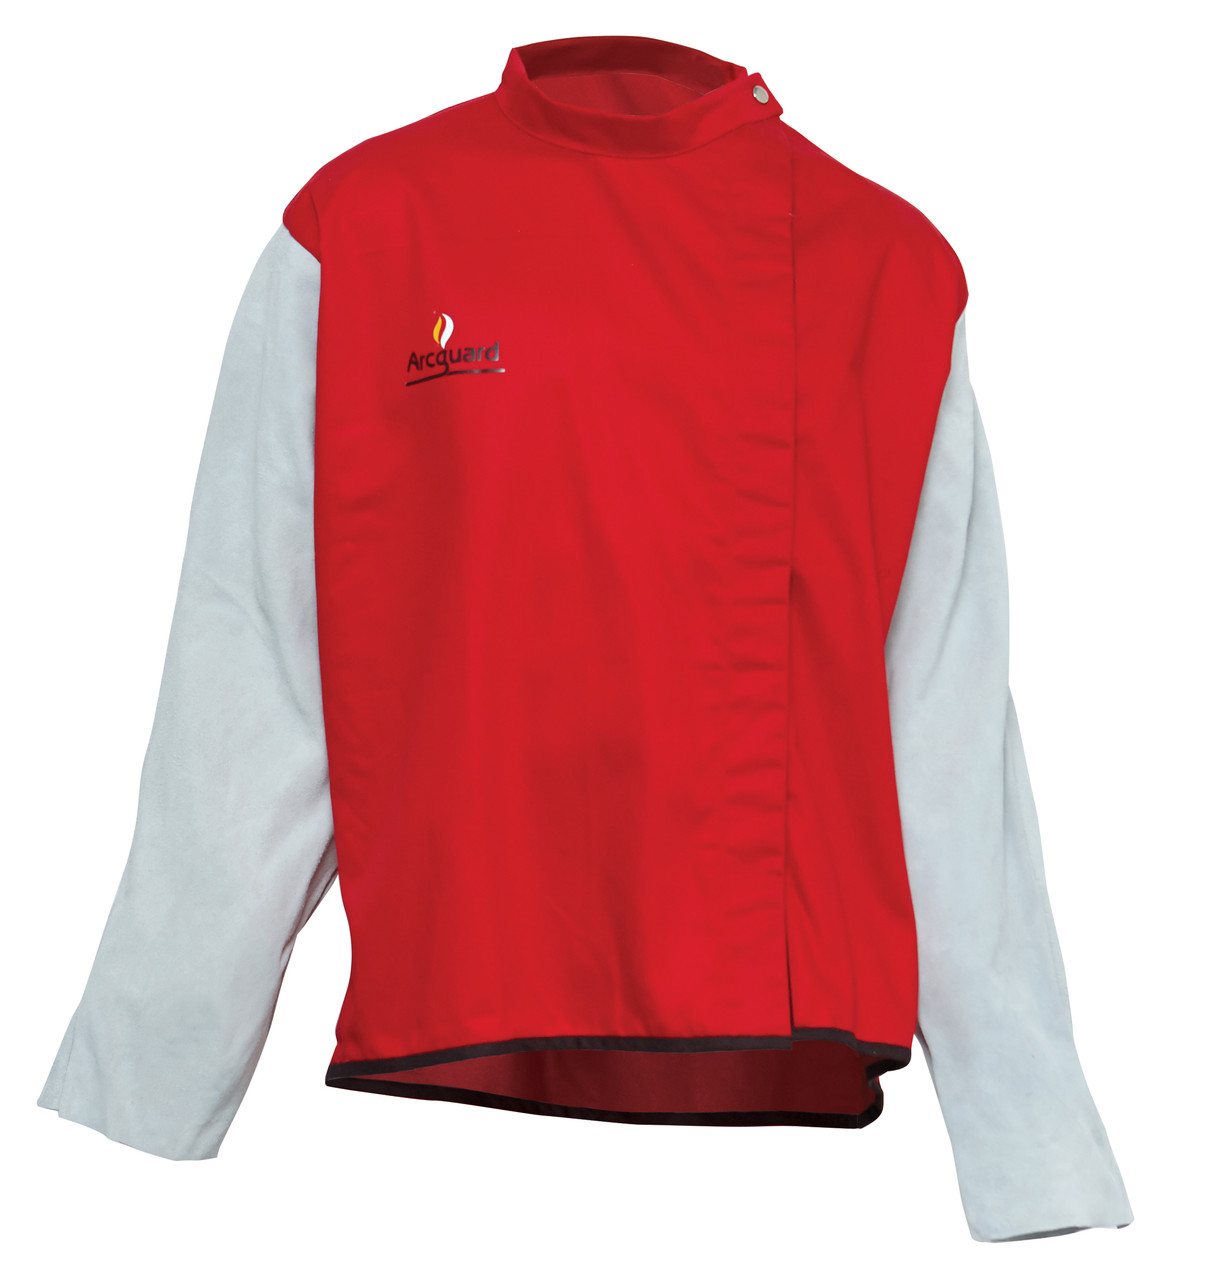 Arcguard Welding Jacket With Leather Sleeves - 3Xlarge